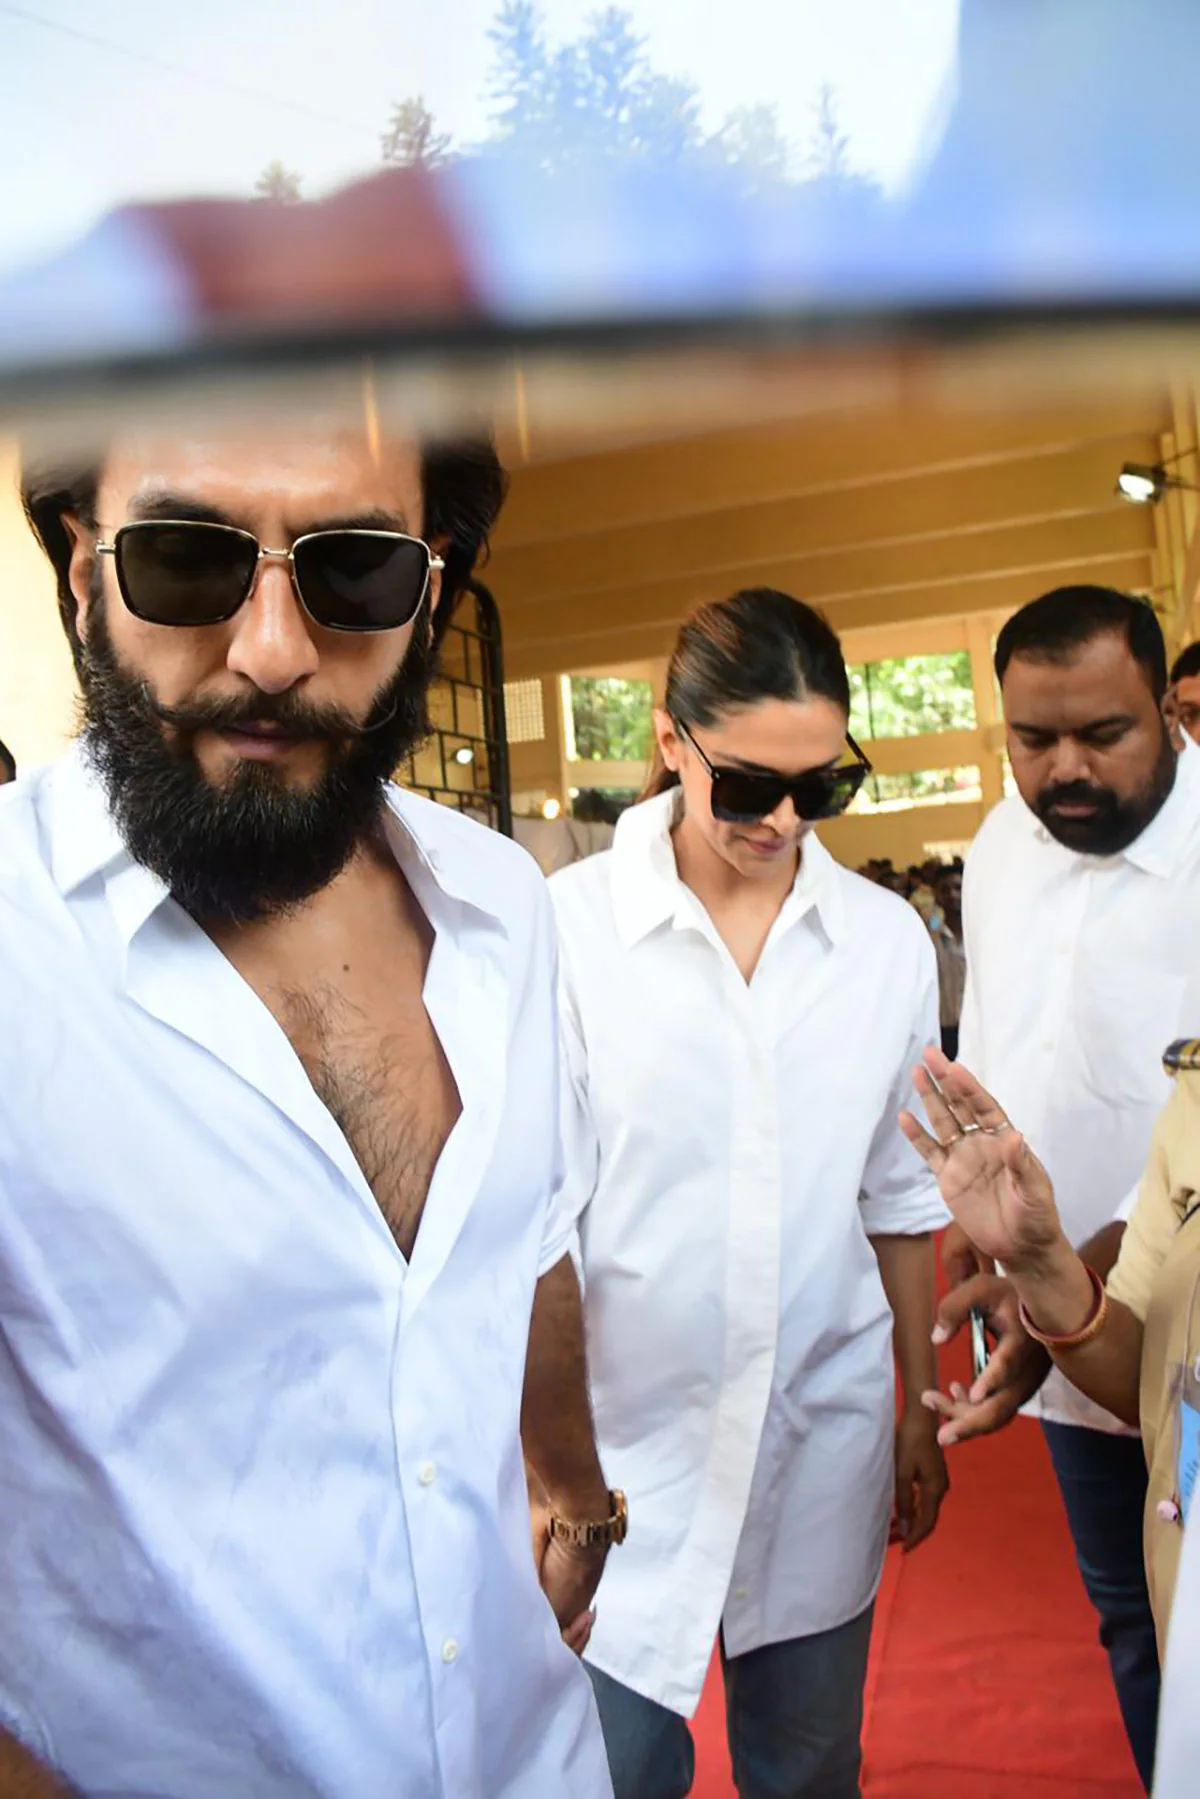 Deepika Padukone spotted with baby bump outside polling station alongside husband Ranveer Singh.